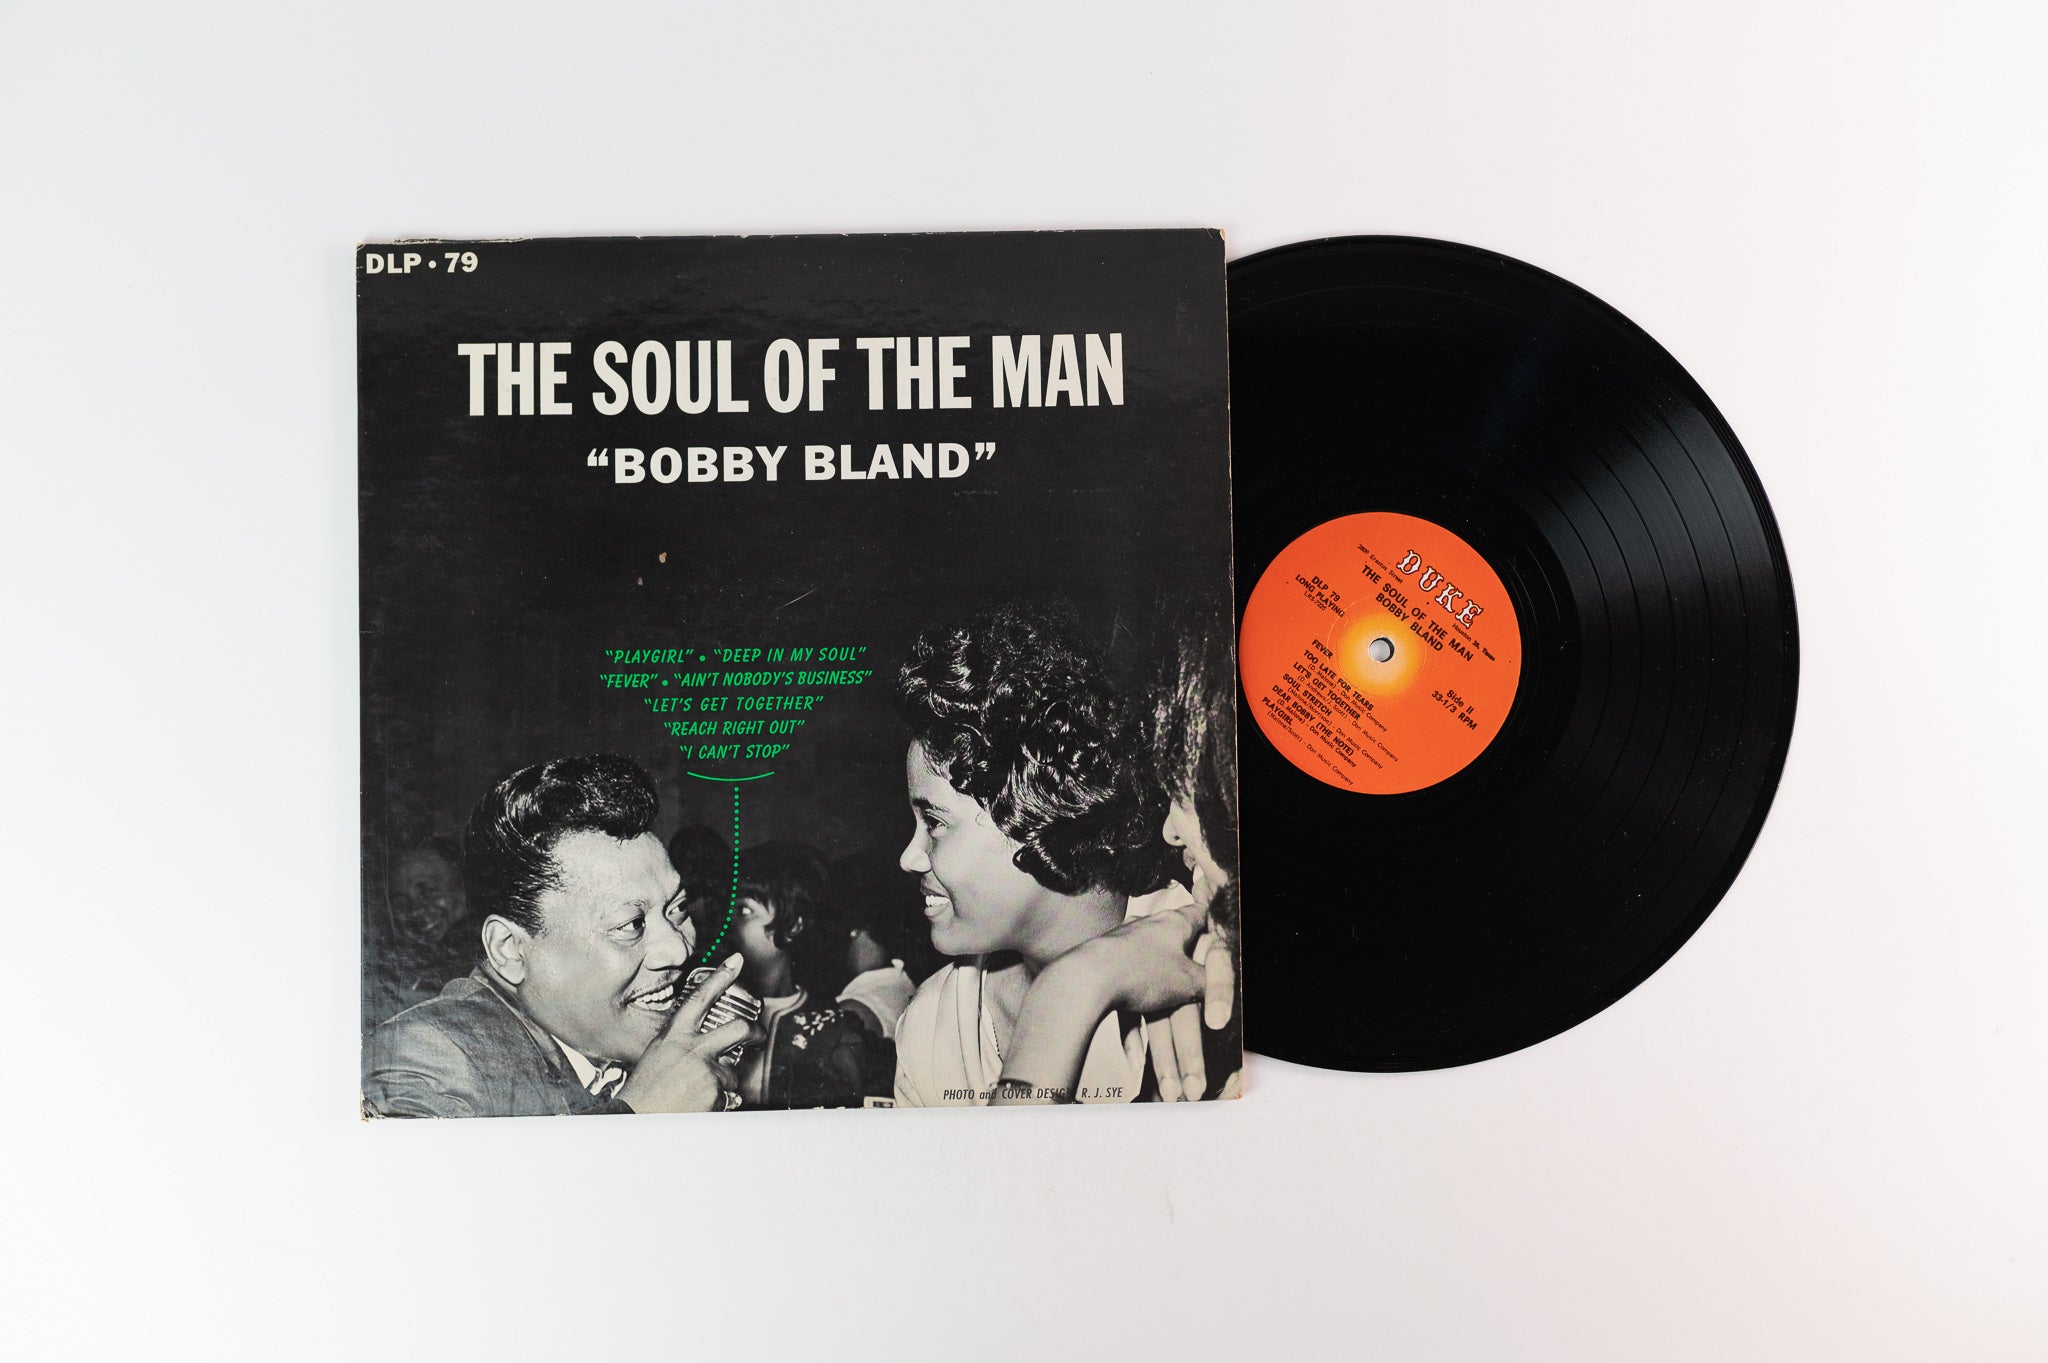 Bobby Bland - The Soul Of The Man on Duke